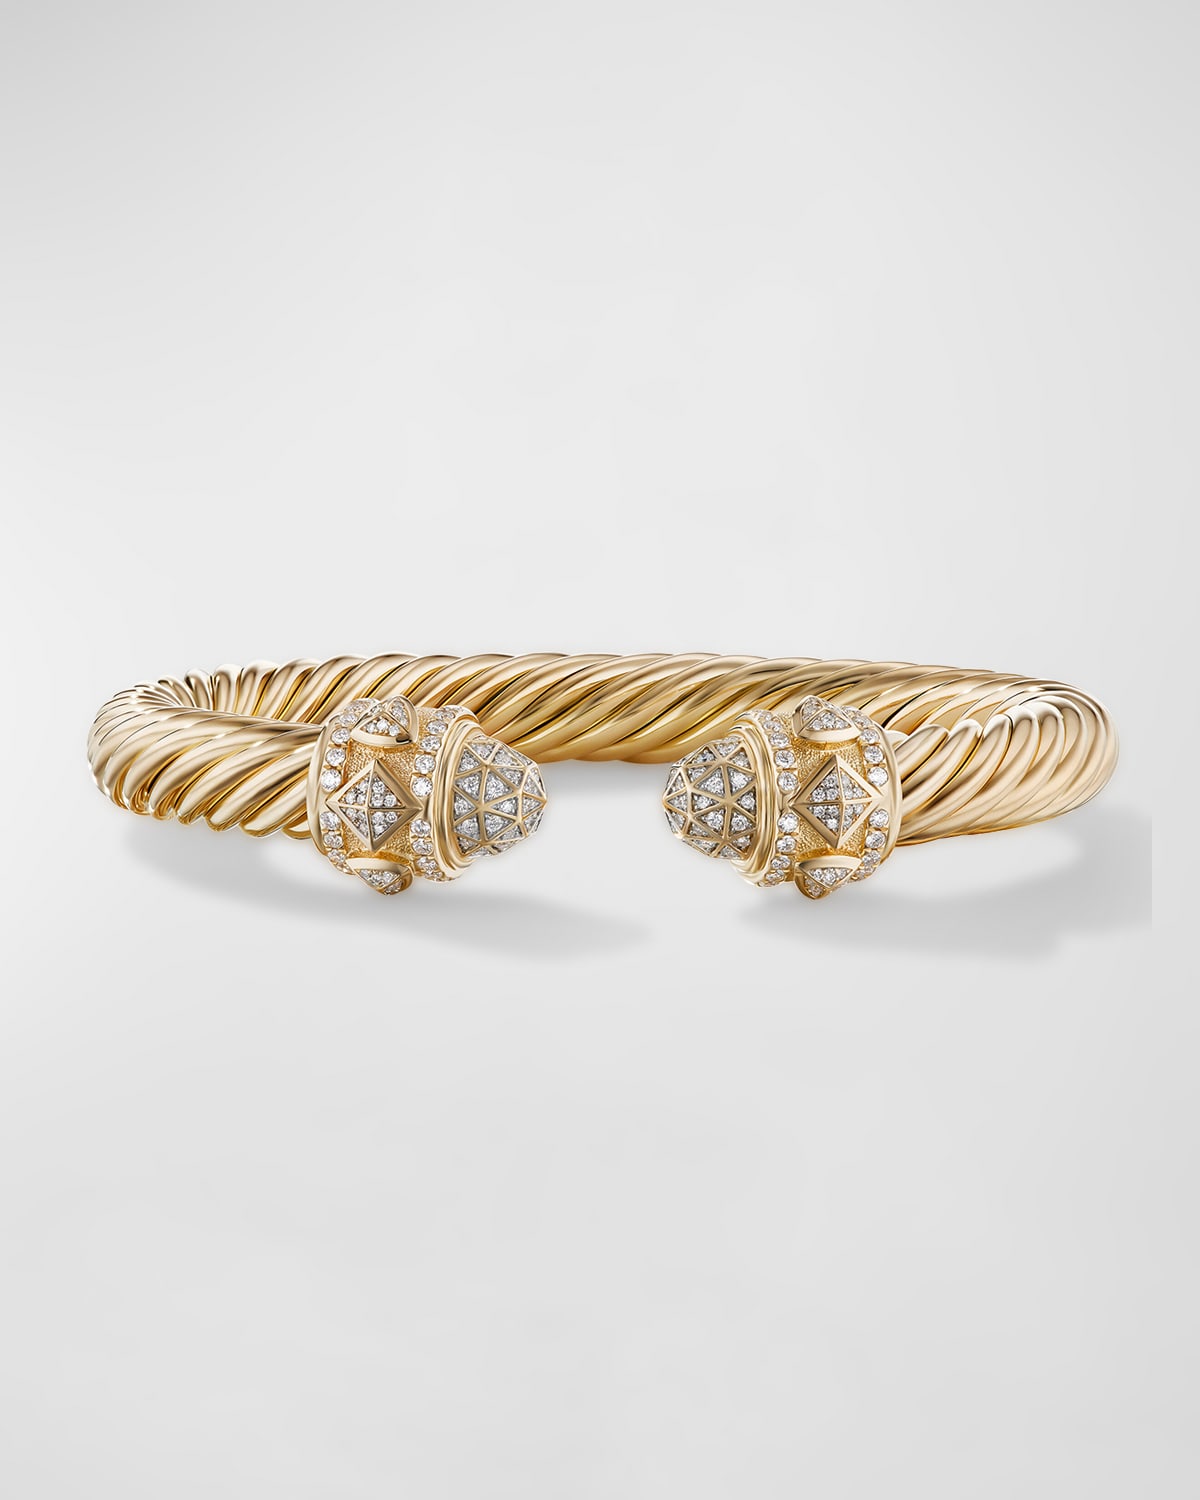 David Yurman Renaissance Bracelet With Pearls And Diamonds In 18k Gold, 11mm